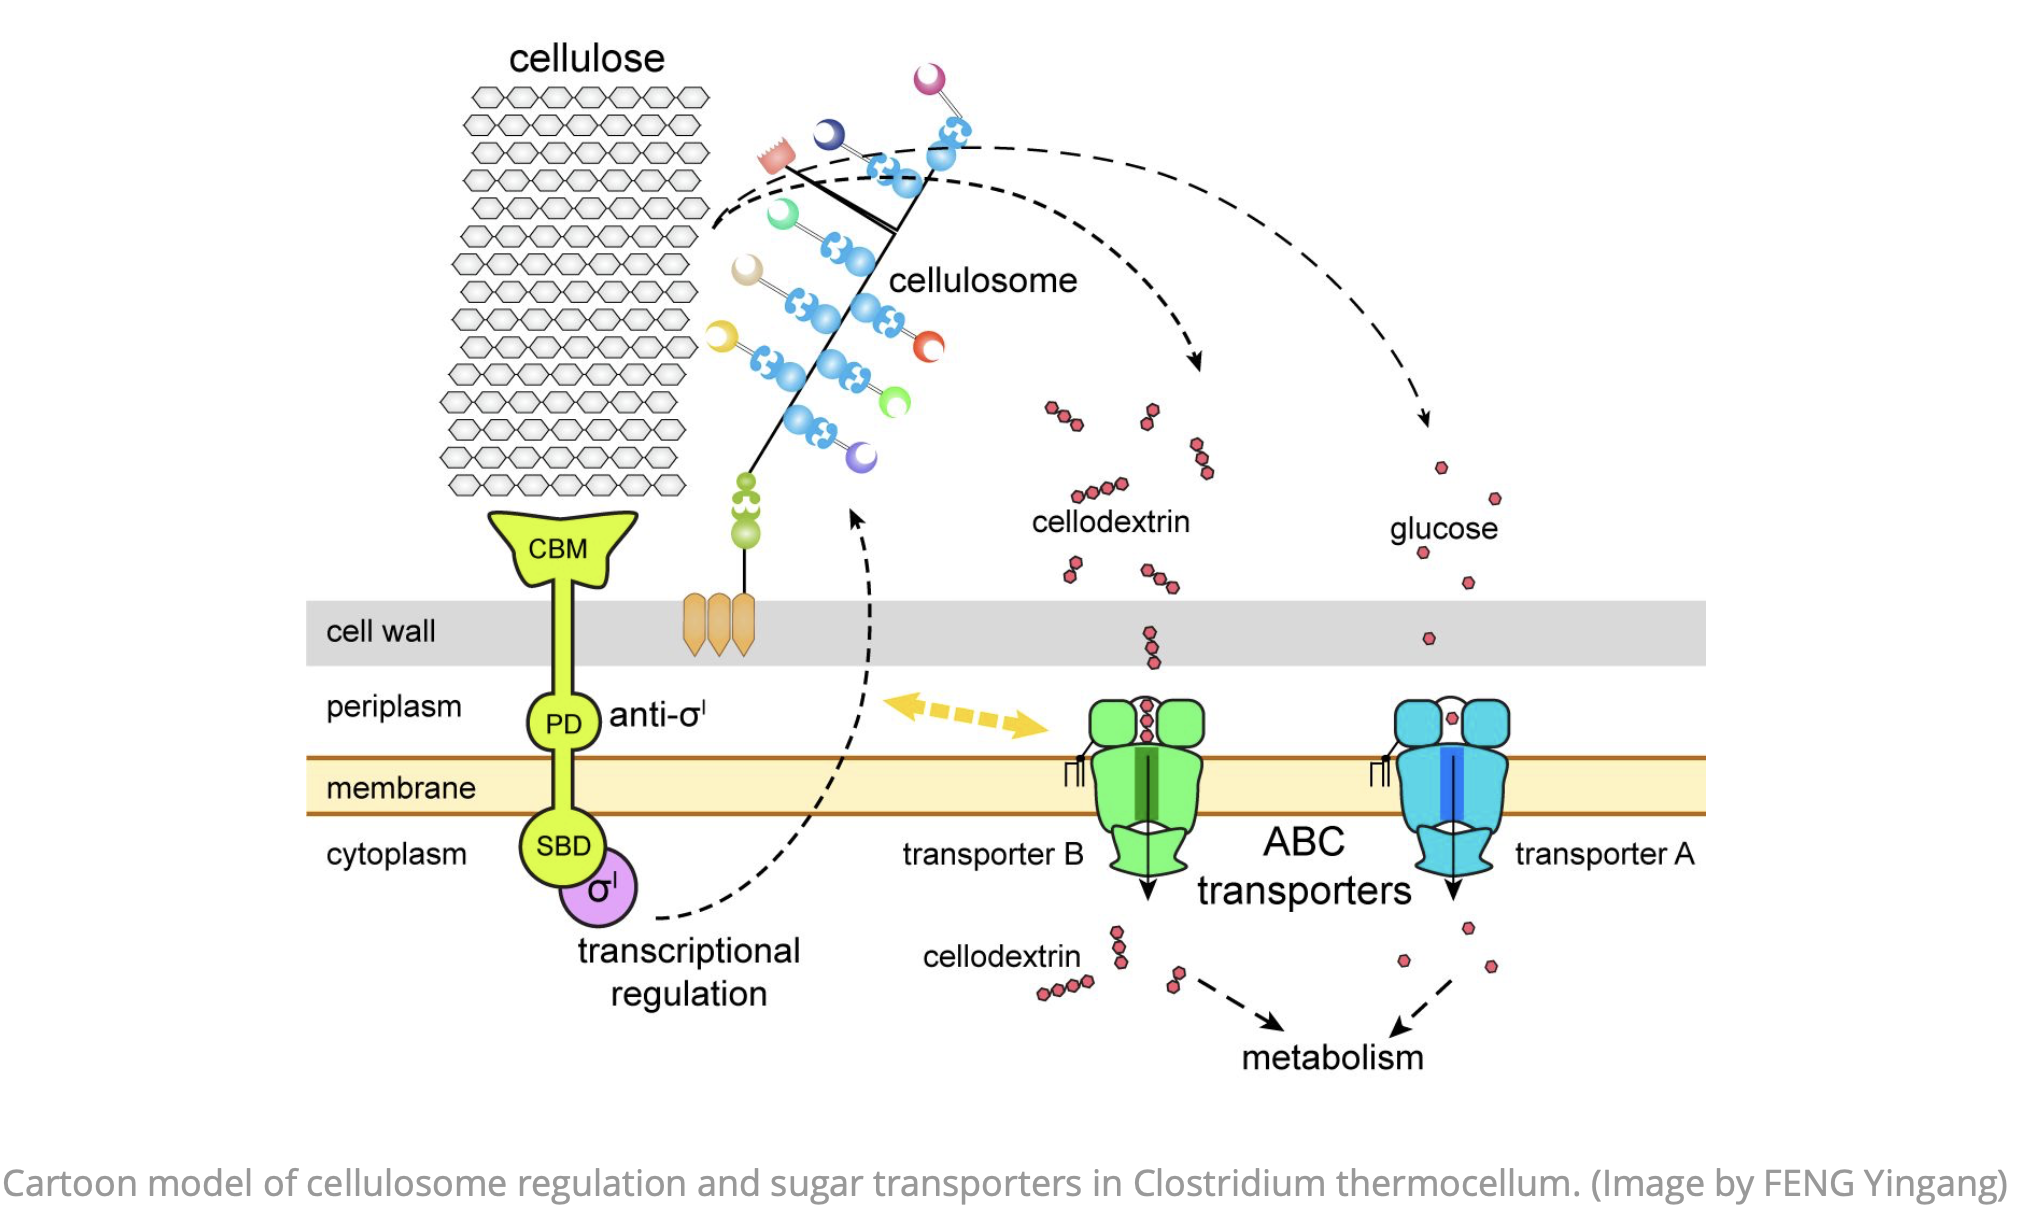 About the sugar uptake in Clostridium thermocellum: CAS QIBEBT